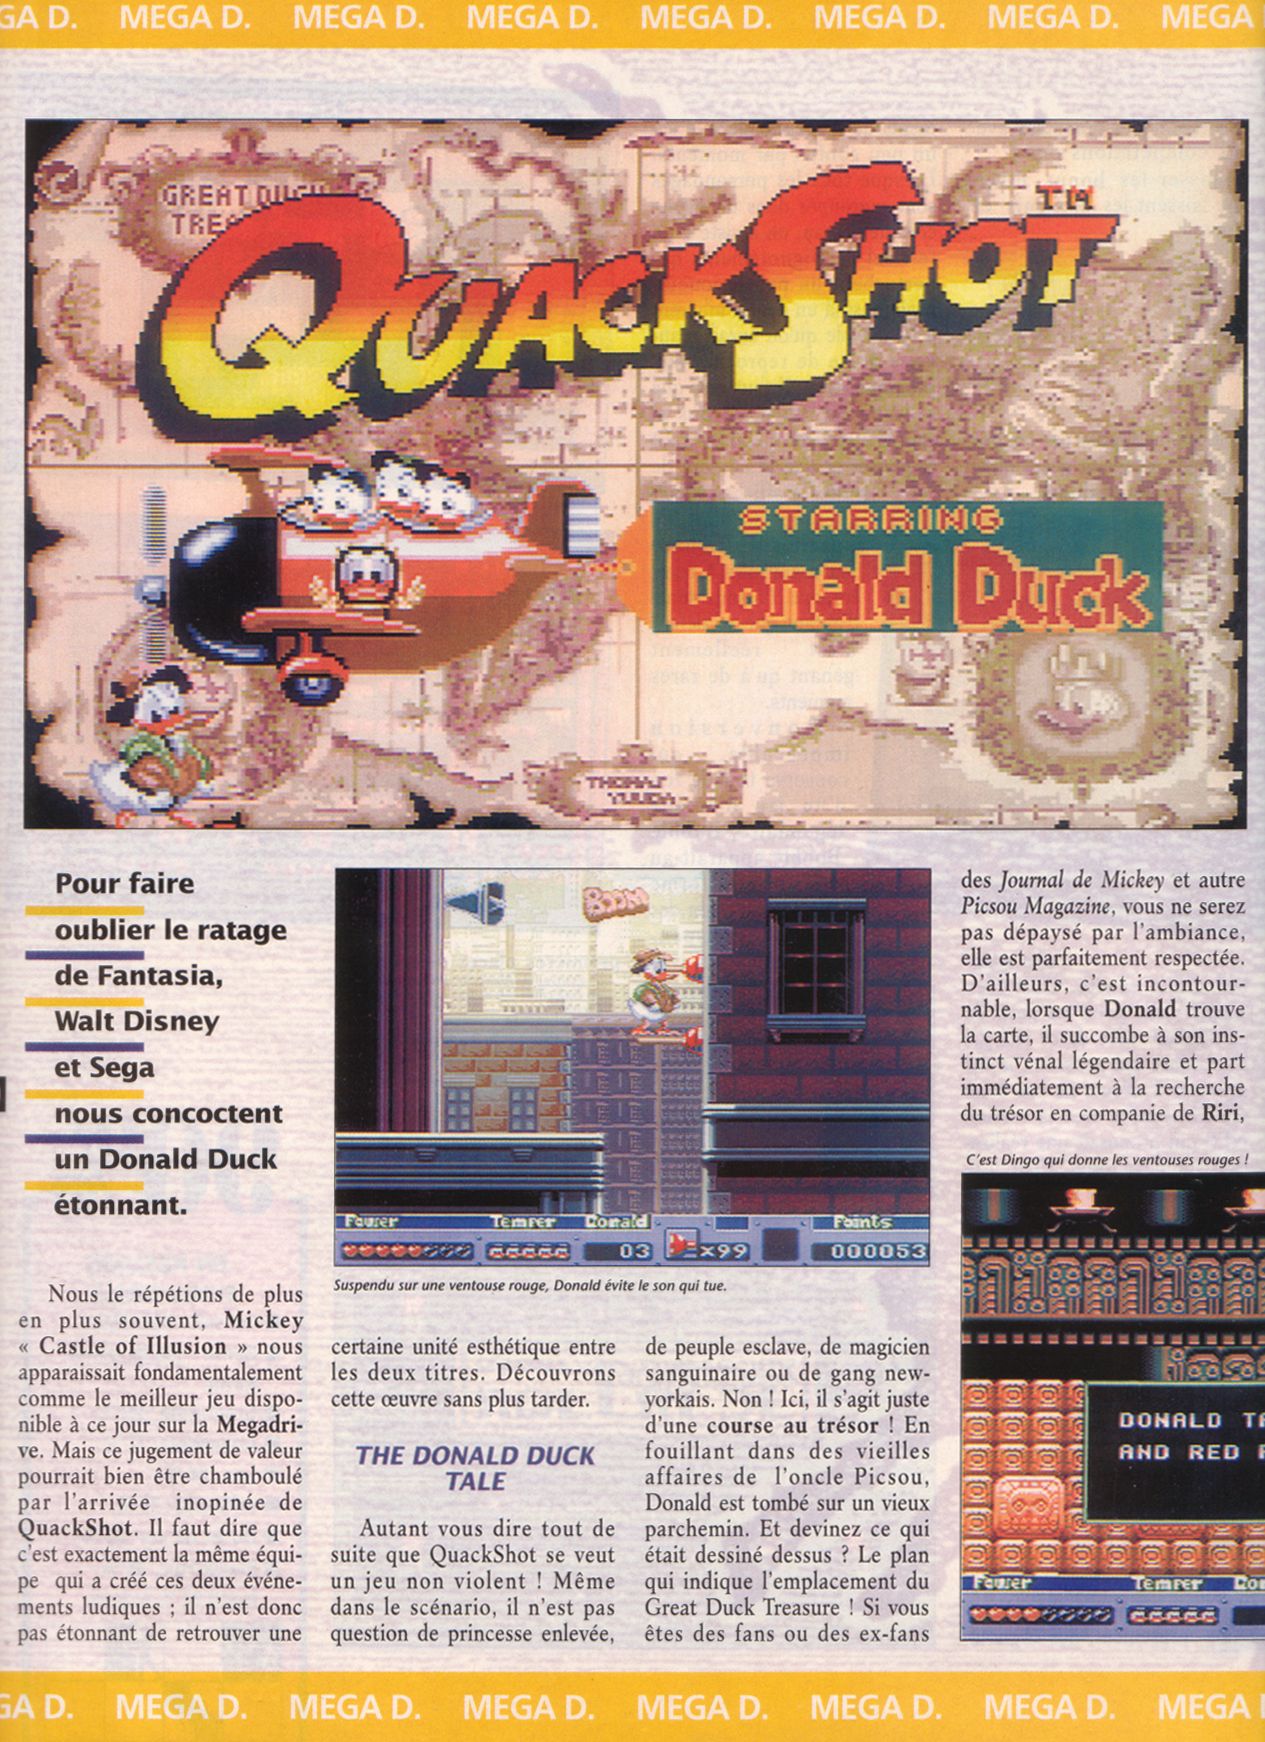 [TEST] Quackshot (Mega Drive) Player%20One%20015%20-%20Page%20050%20%281991-12%29